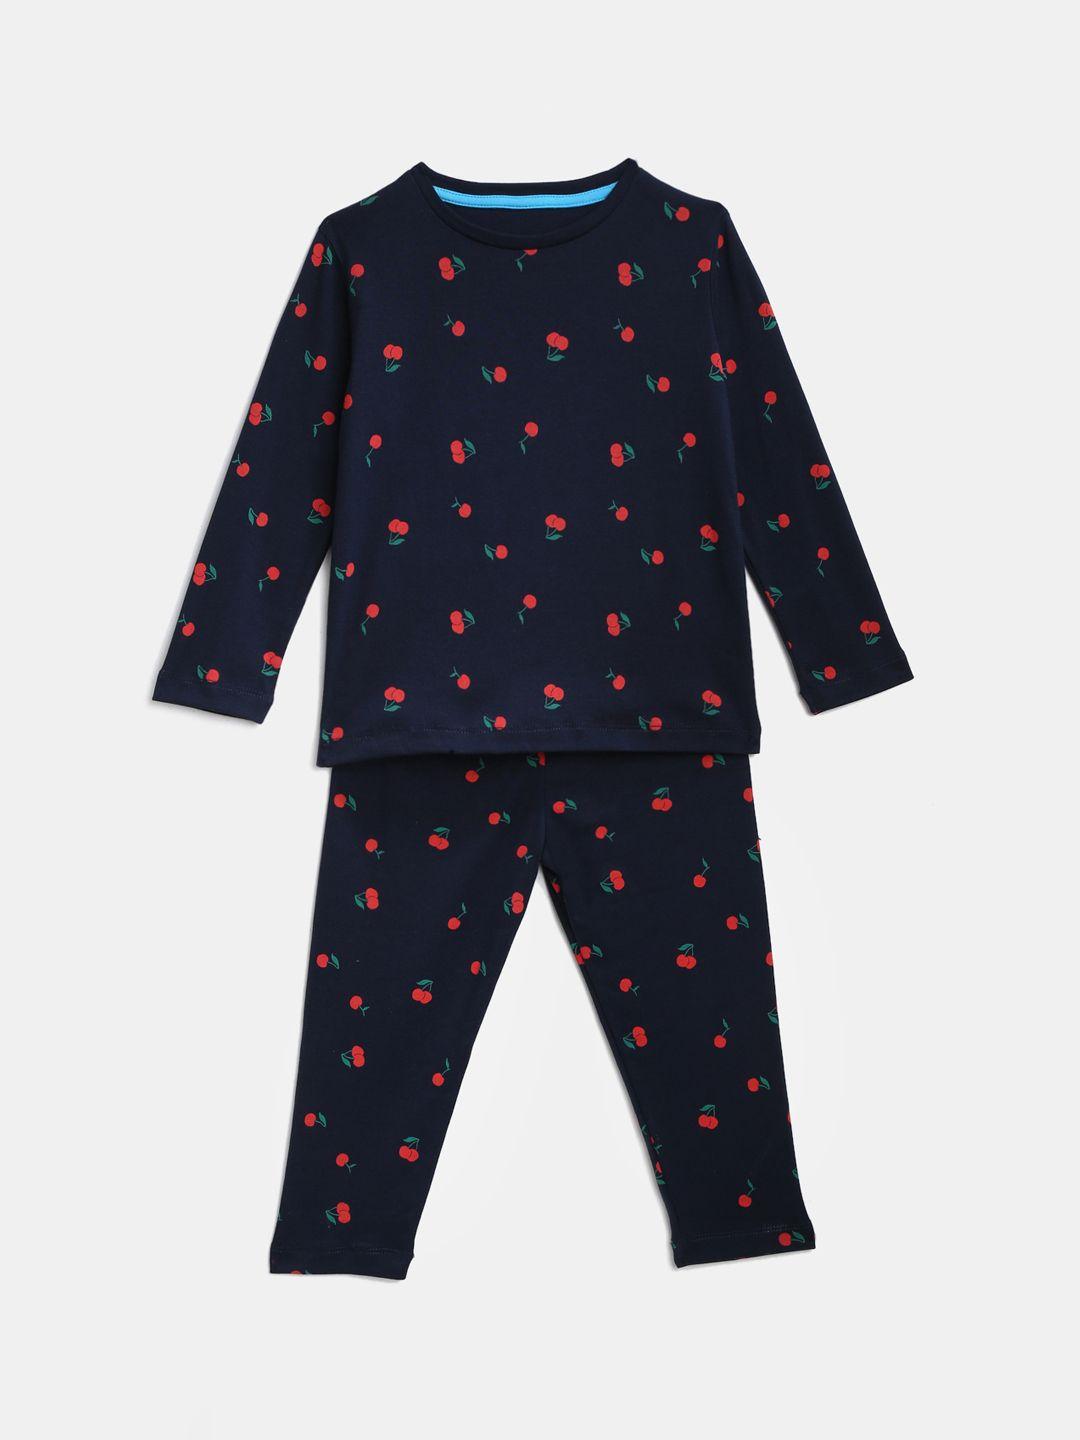 kidscraft boys navy blue & red printed night suit